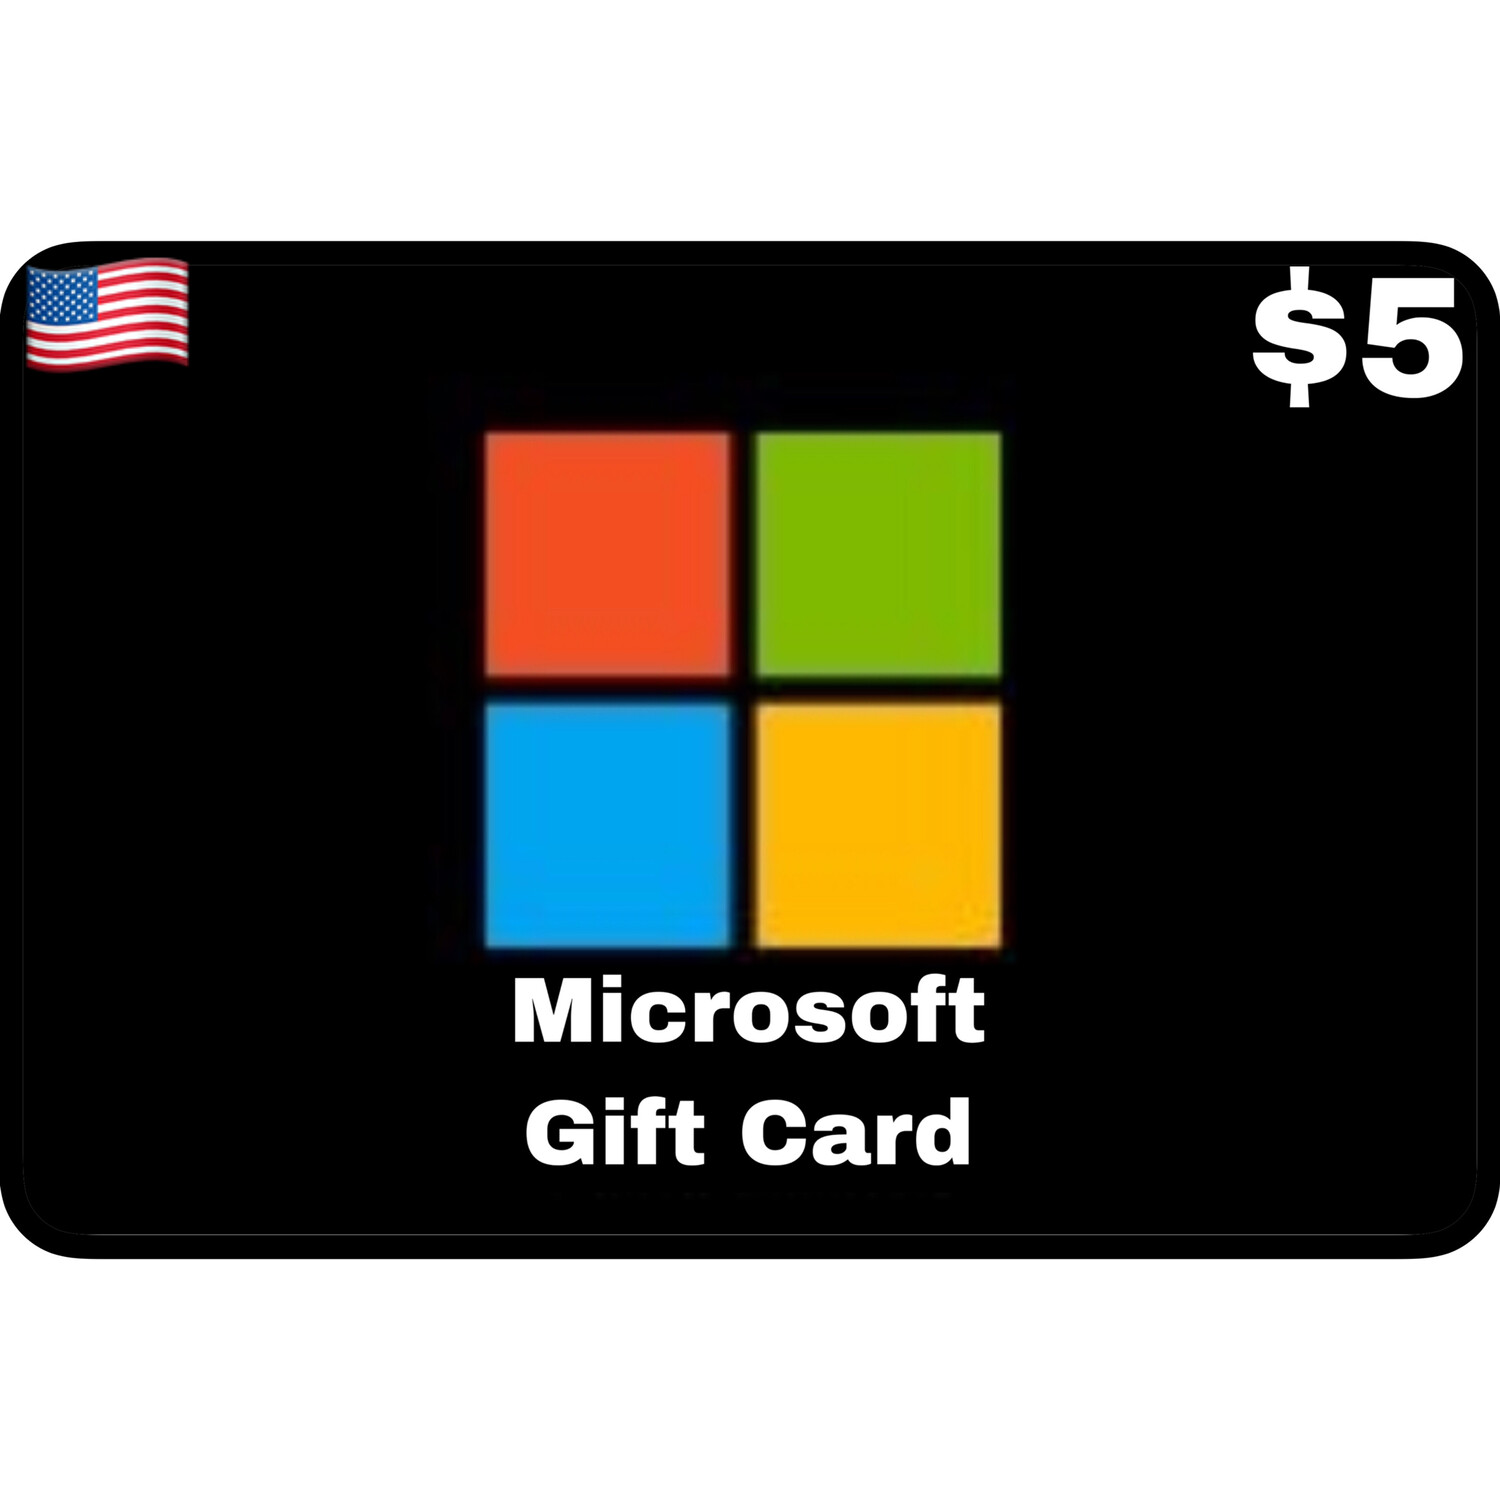 Microsoft Gift Card 5 Digital Code - may 2009 the roblox hq